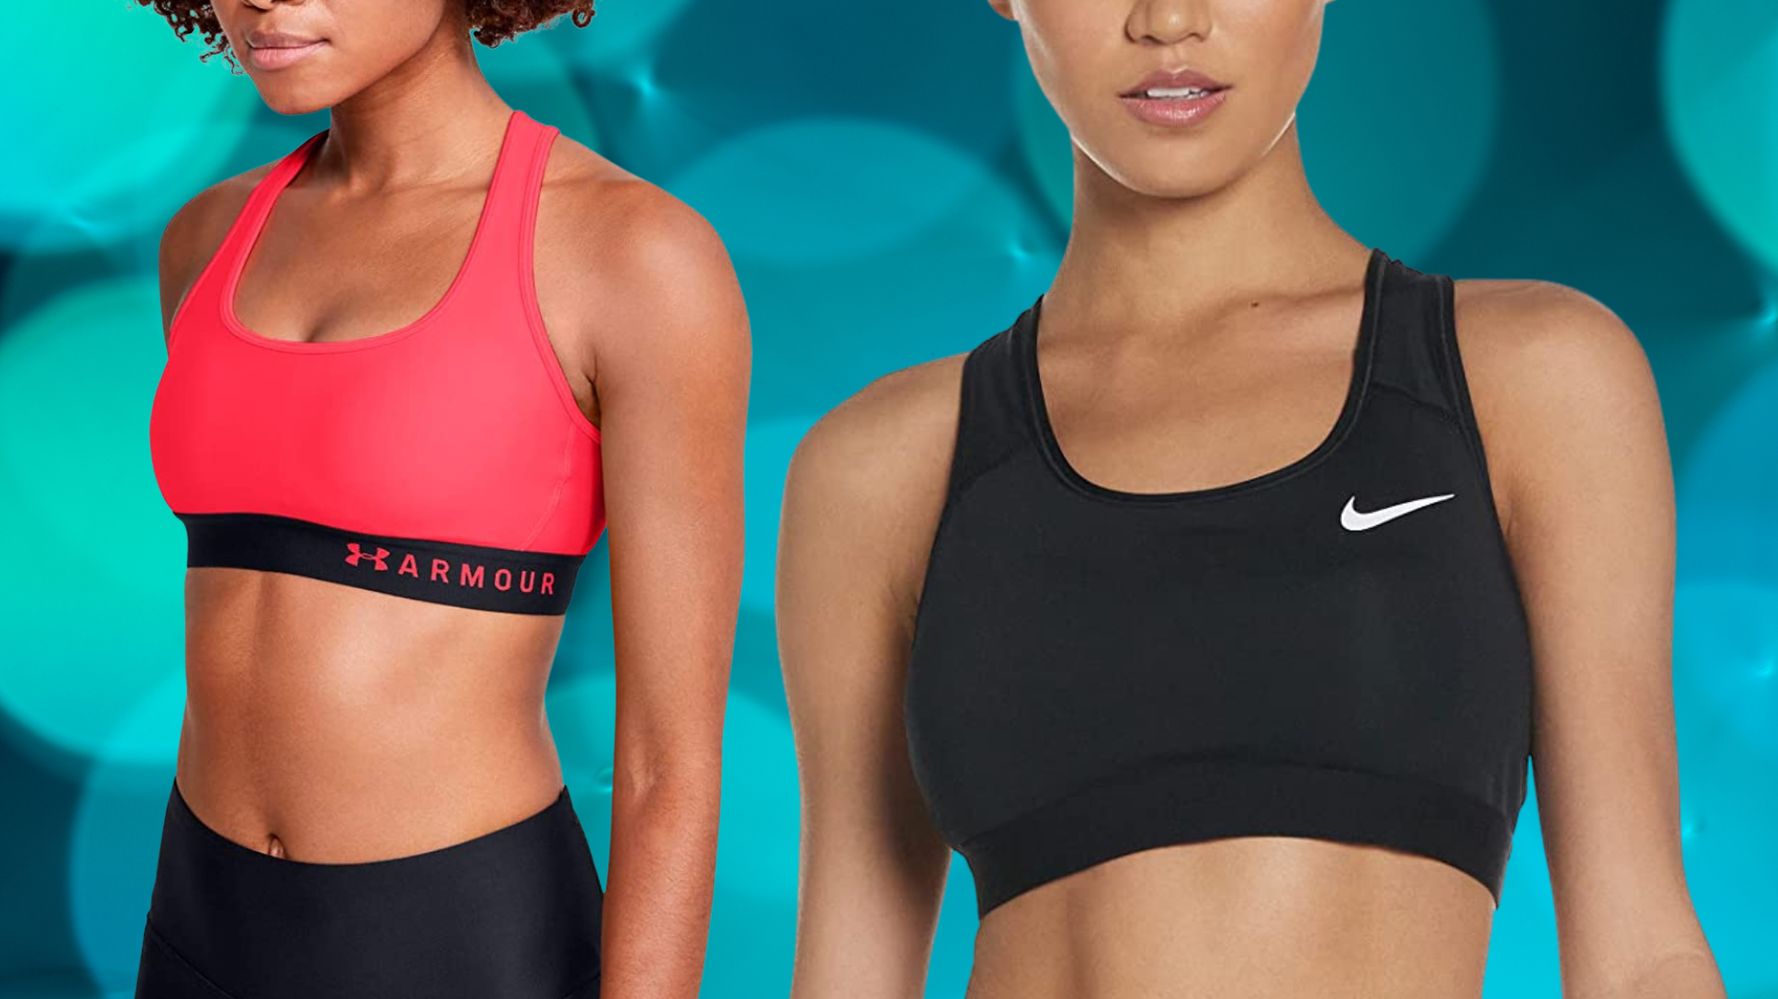 Nike Dri-FIT Shape  Front zip sports bra, Sports bra, High impact sports  bra